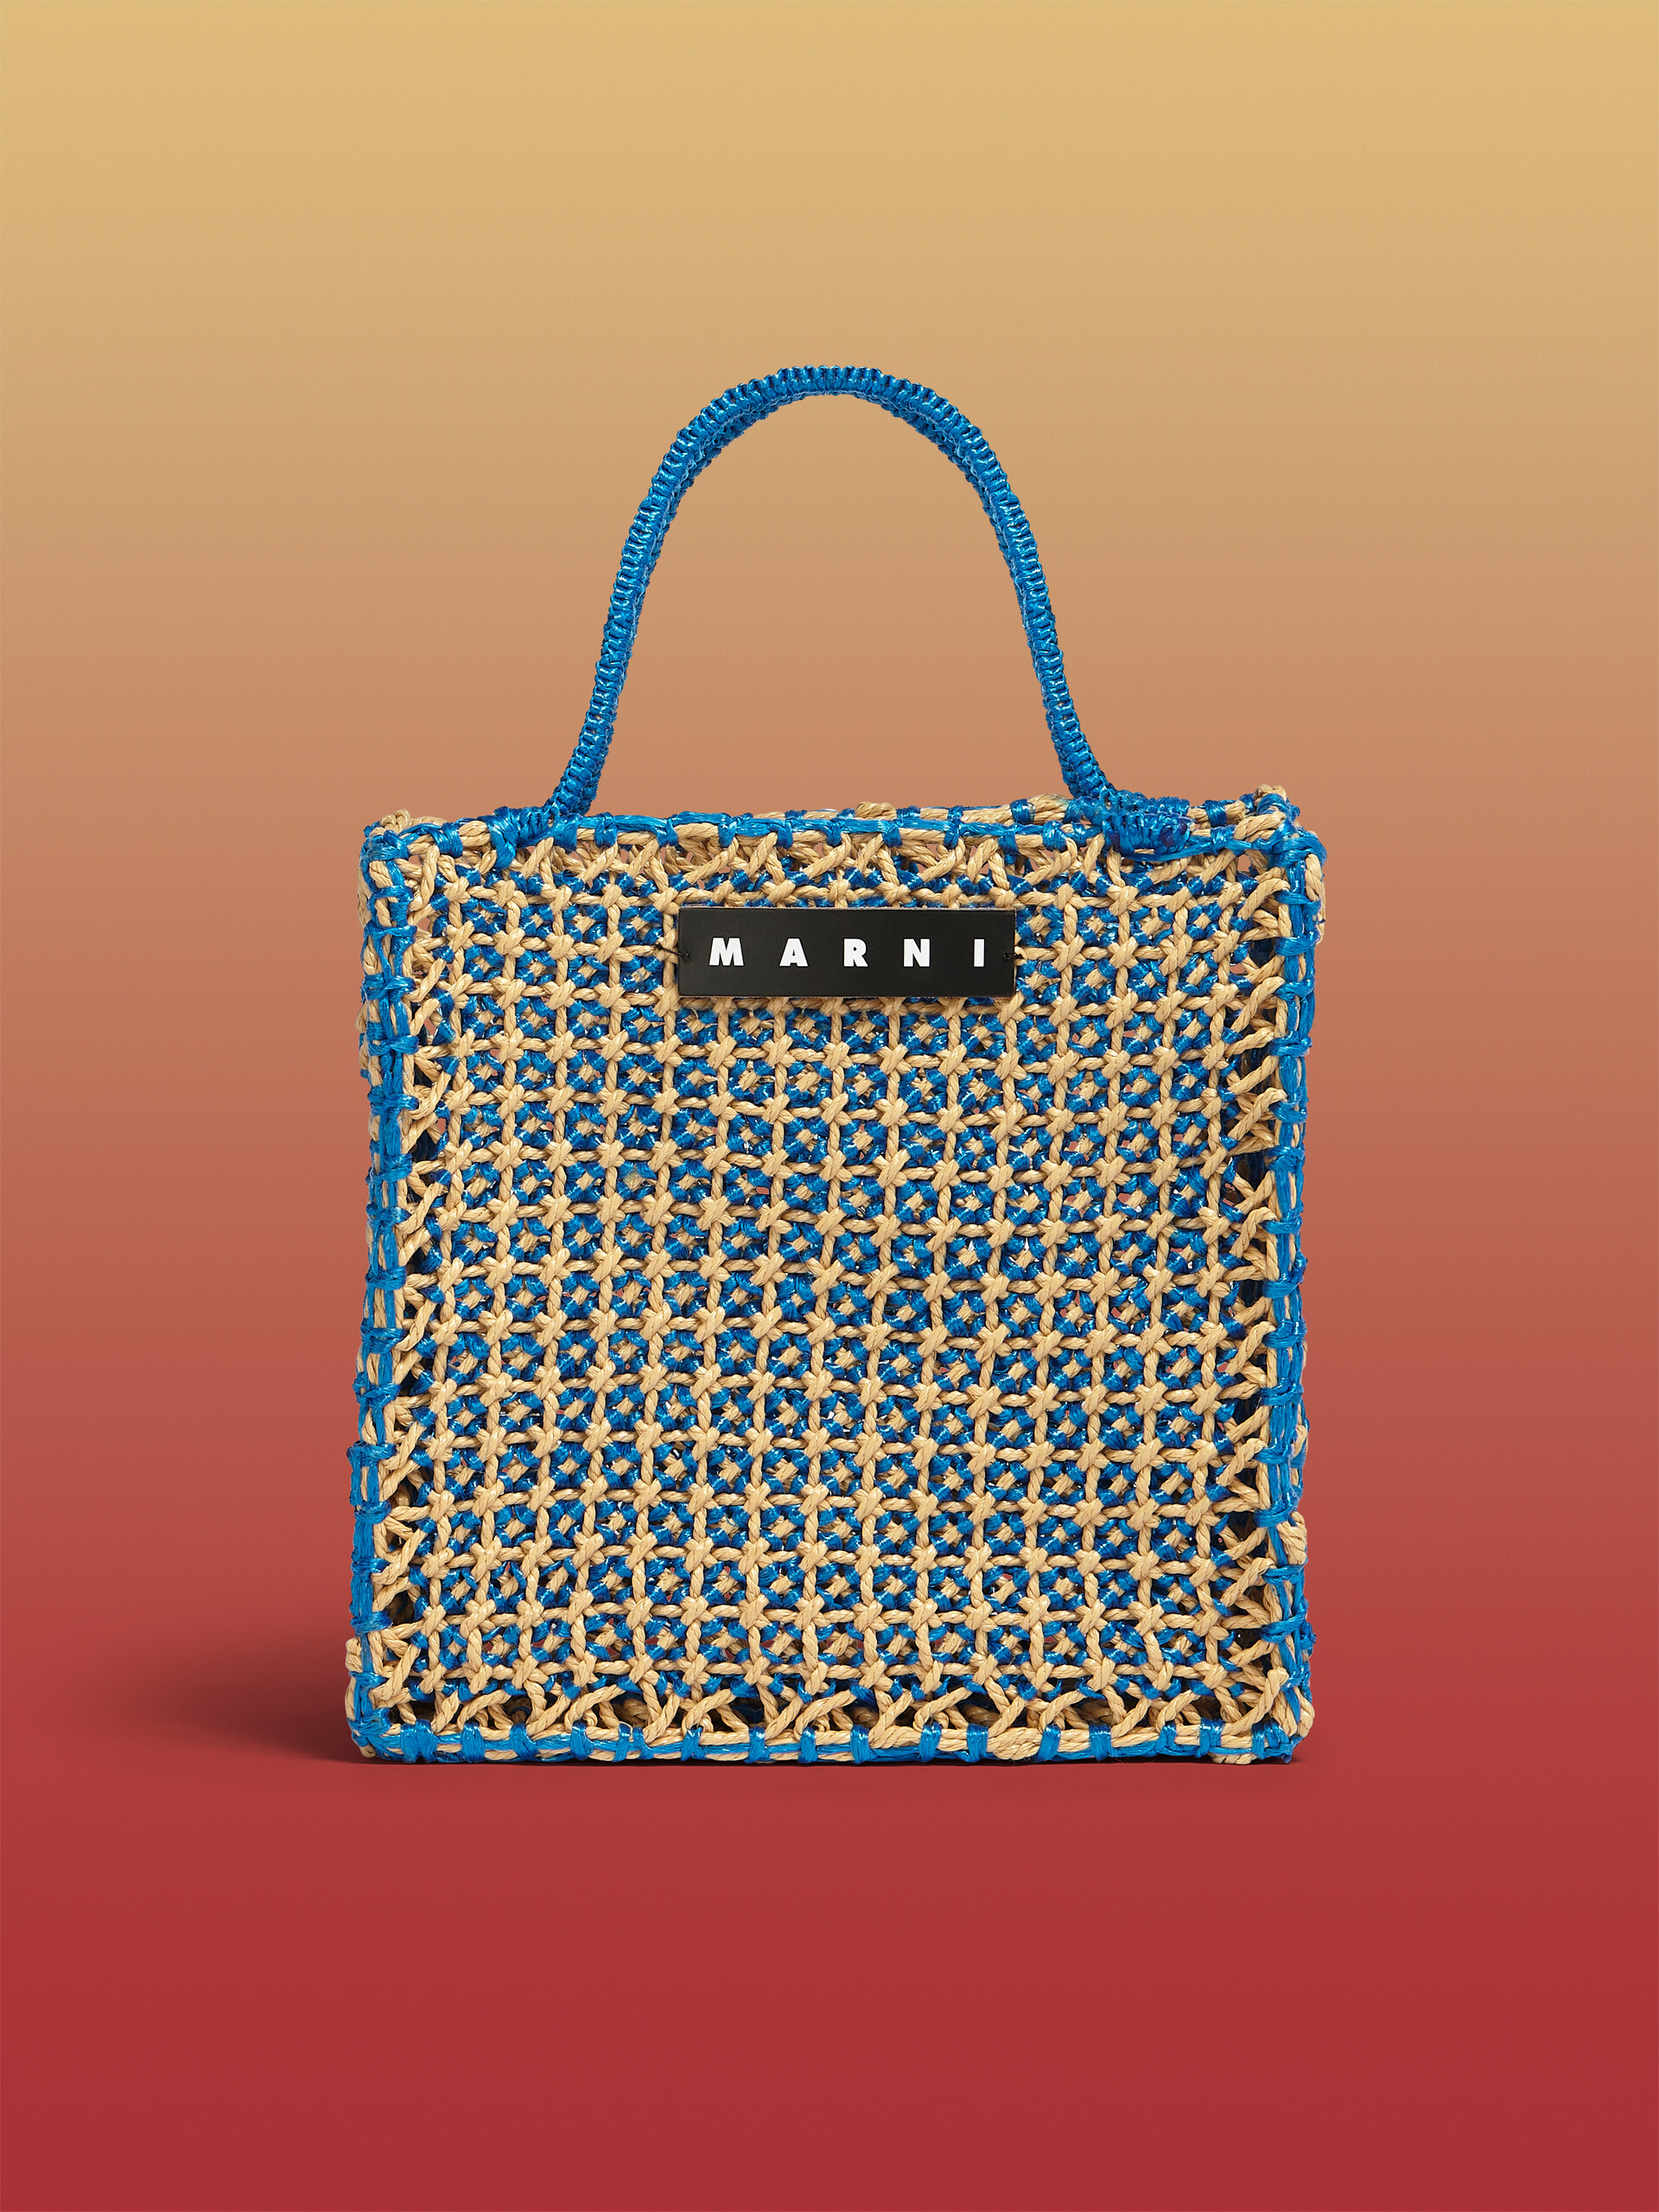 MARNI MARKET JURTA large bag in pale blue and beige crochet - Bags - Image 1